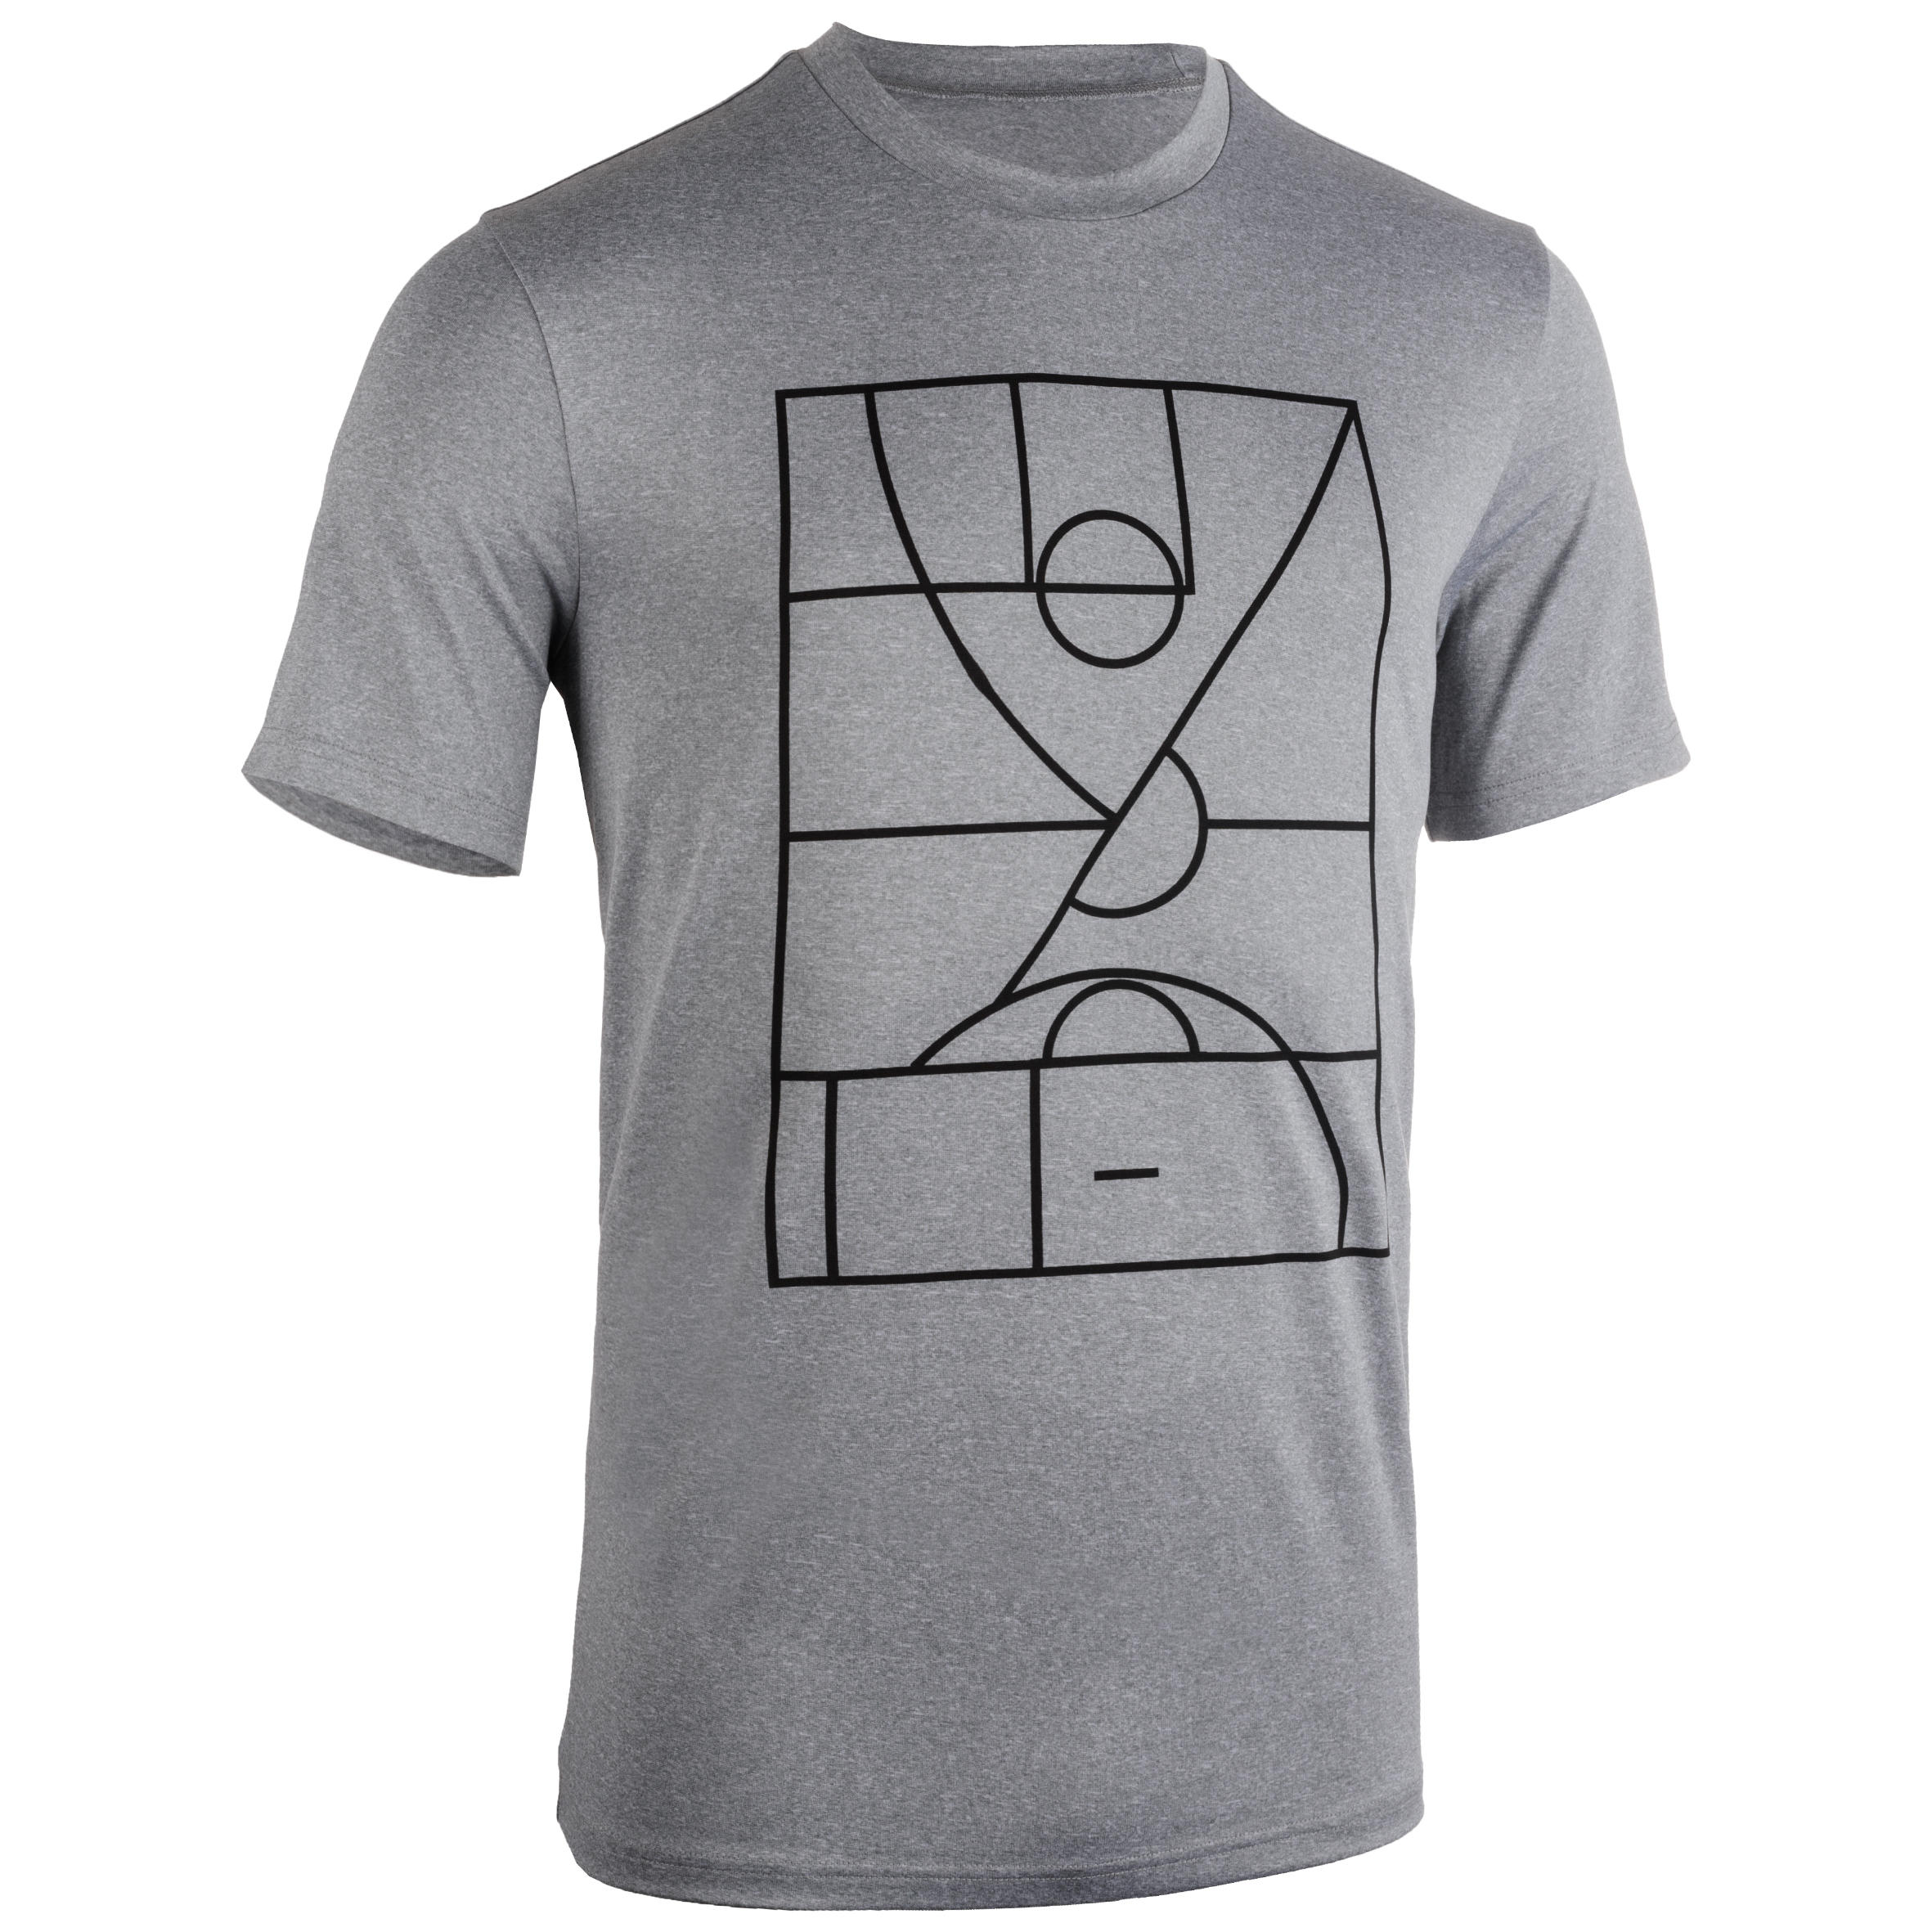 TARMAK Men's Basketball T-Shirt / Jersey TS500 - Grey Playground